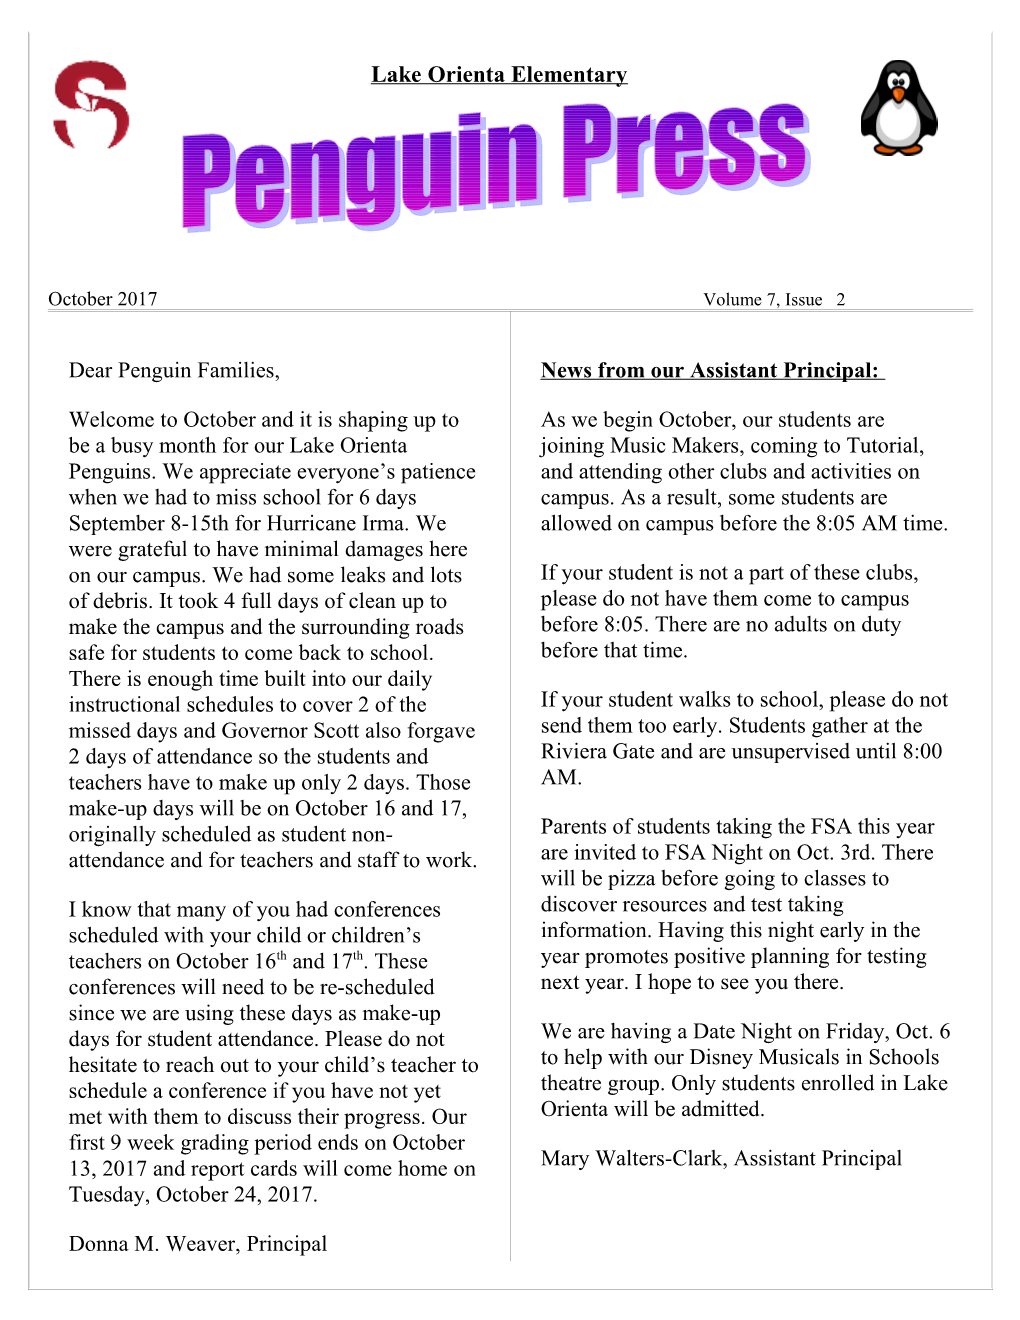 Dear Penguin Families